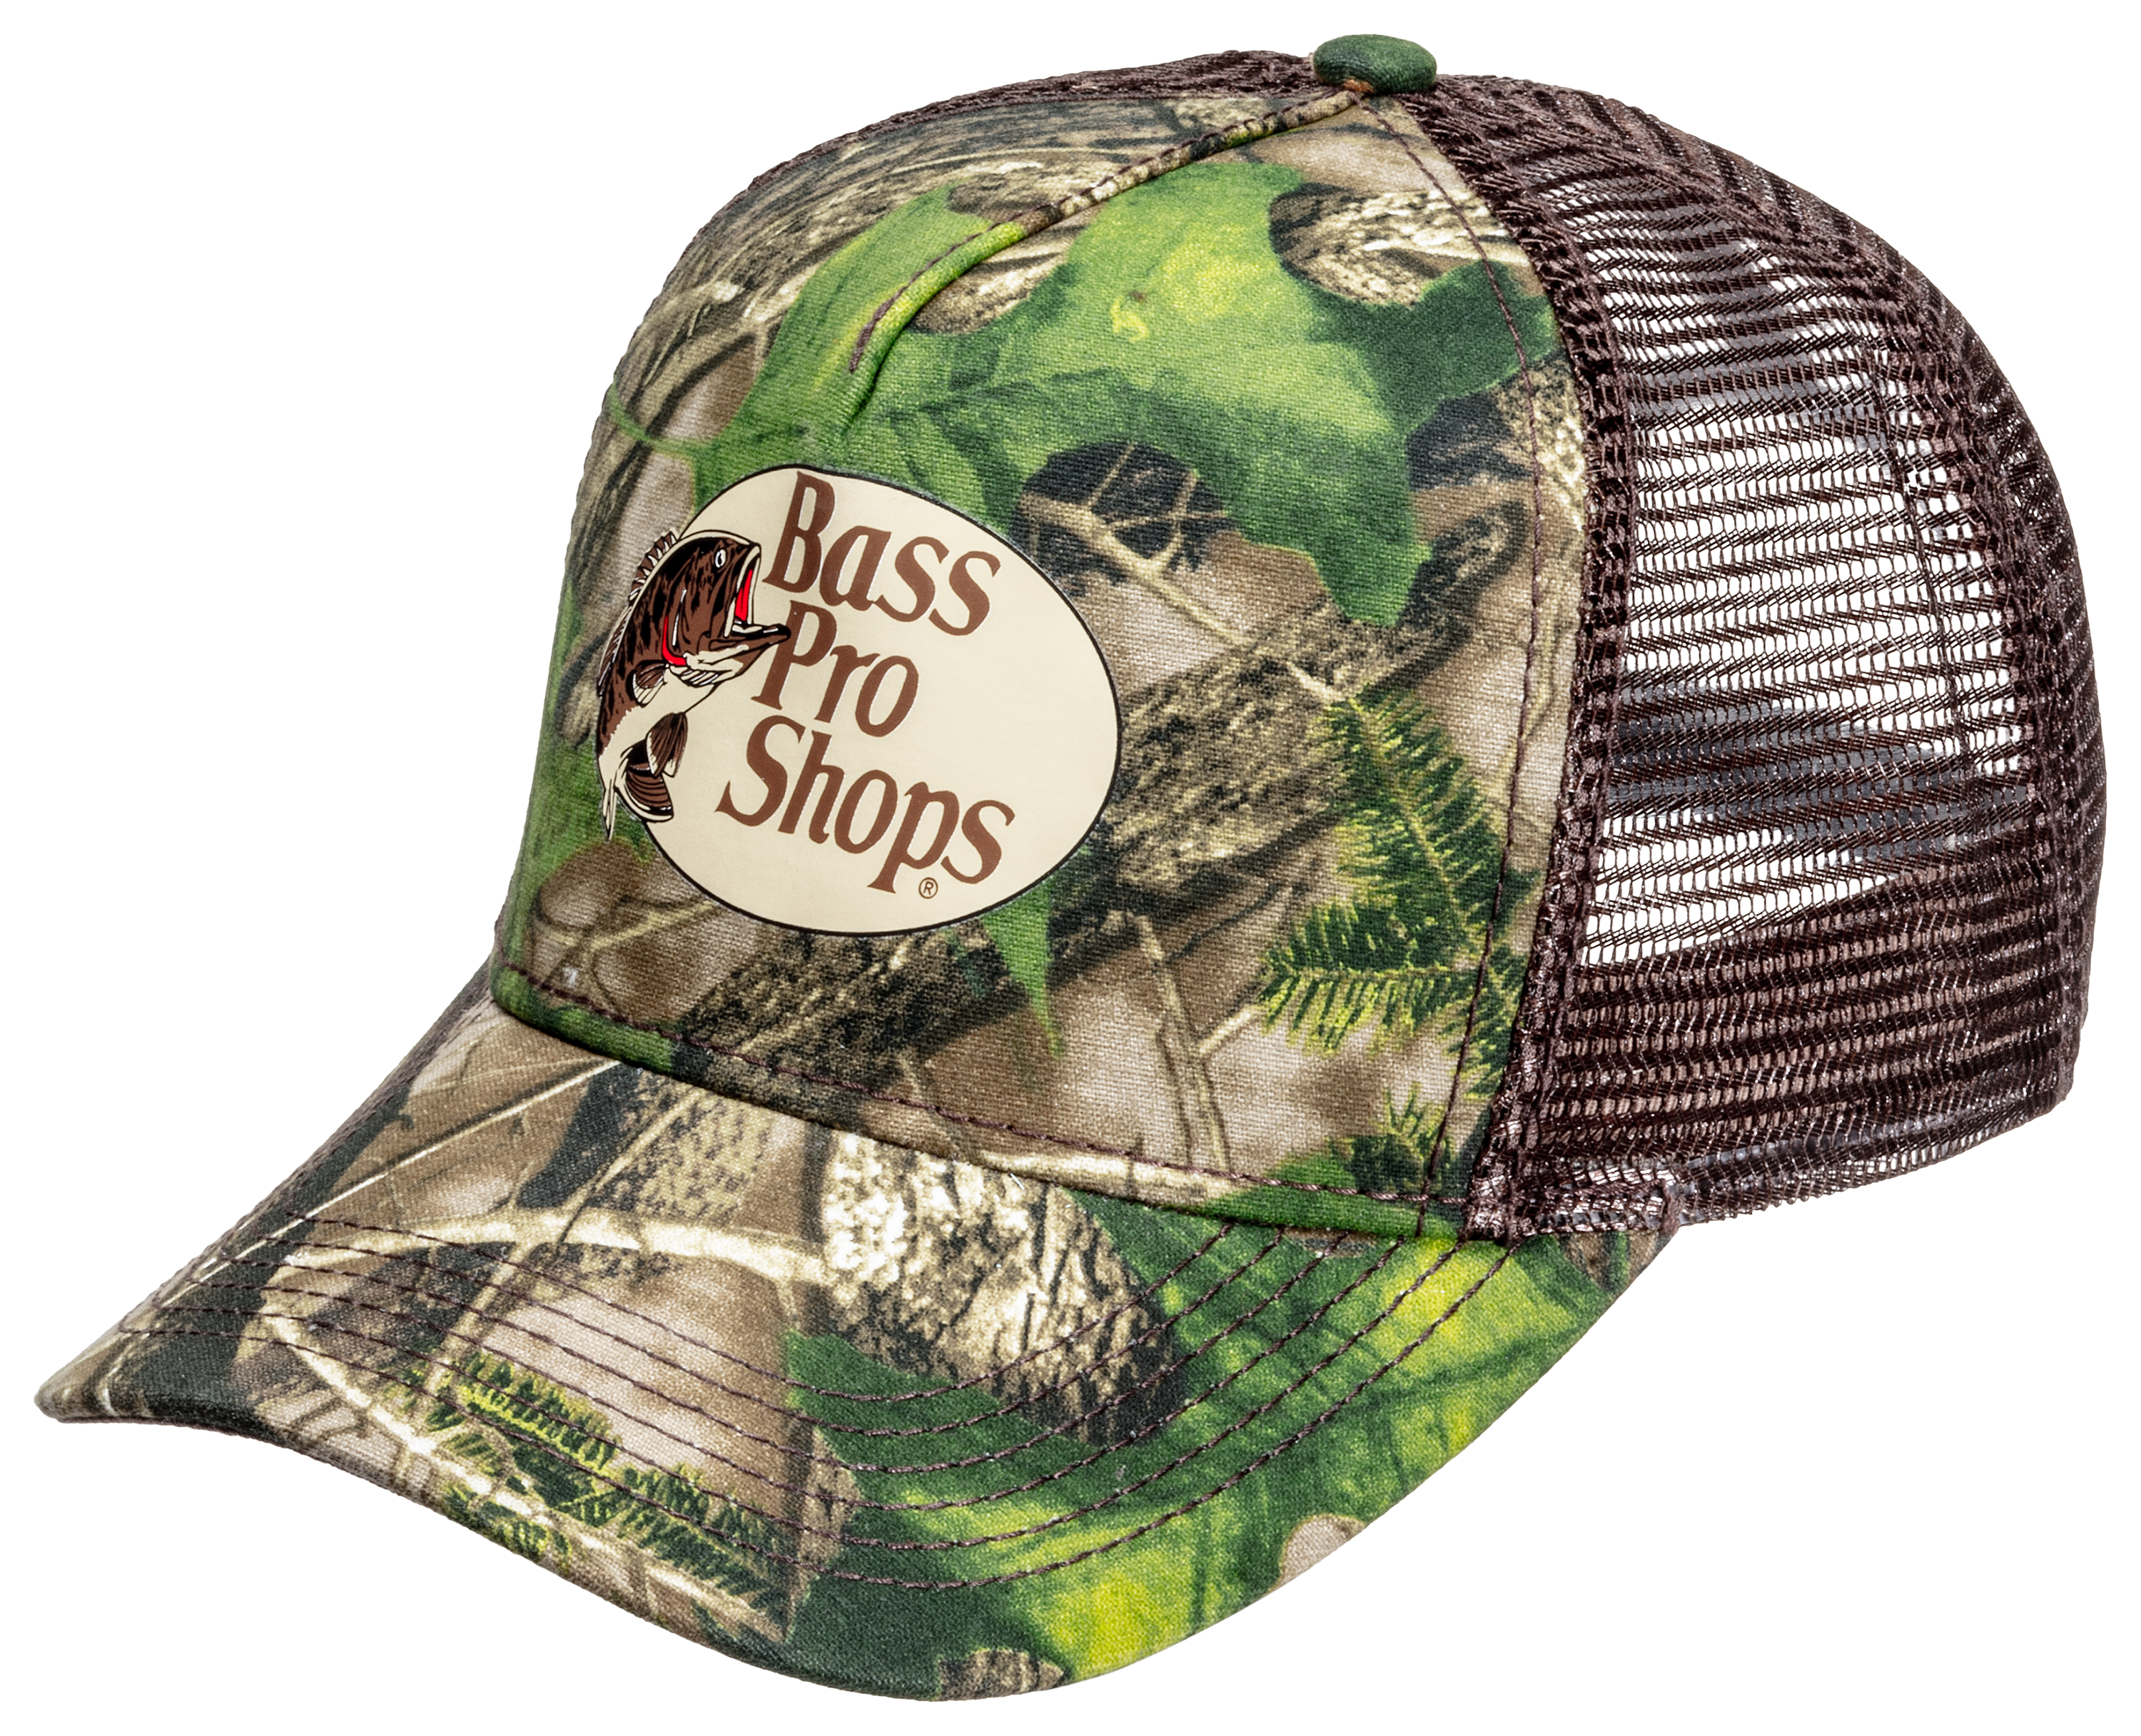 Premium Bass Pro Shops Fishing Hat Cap Camouflage Used Strapback